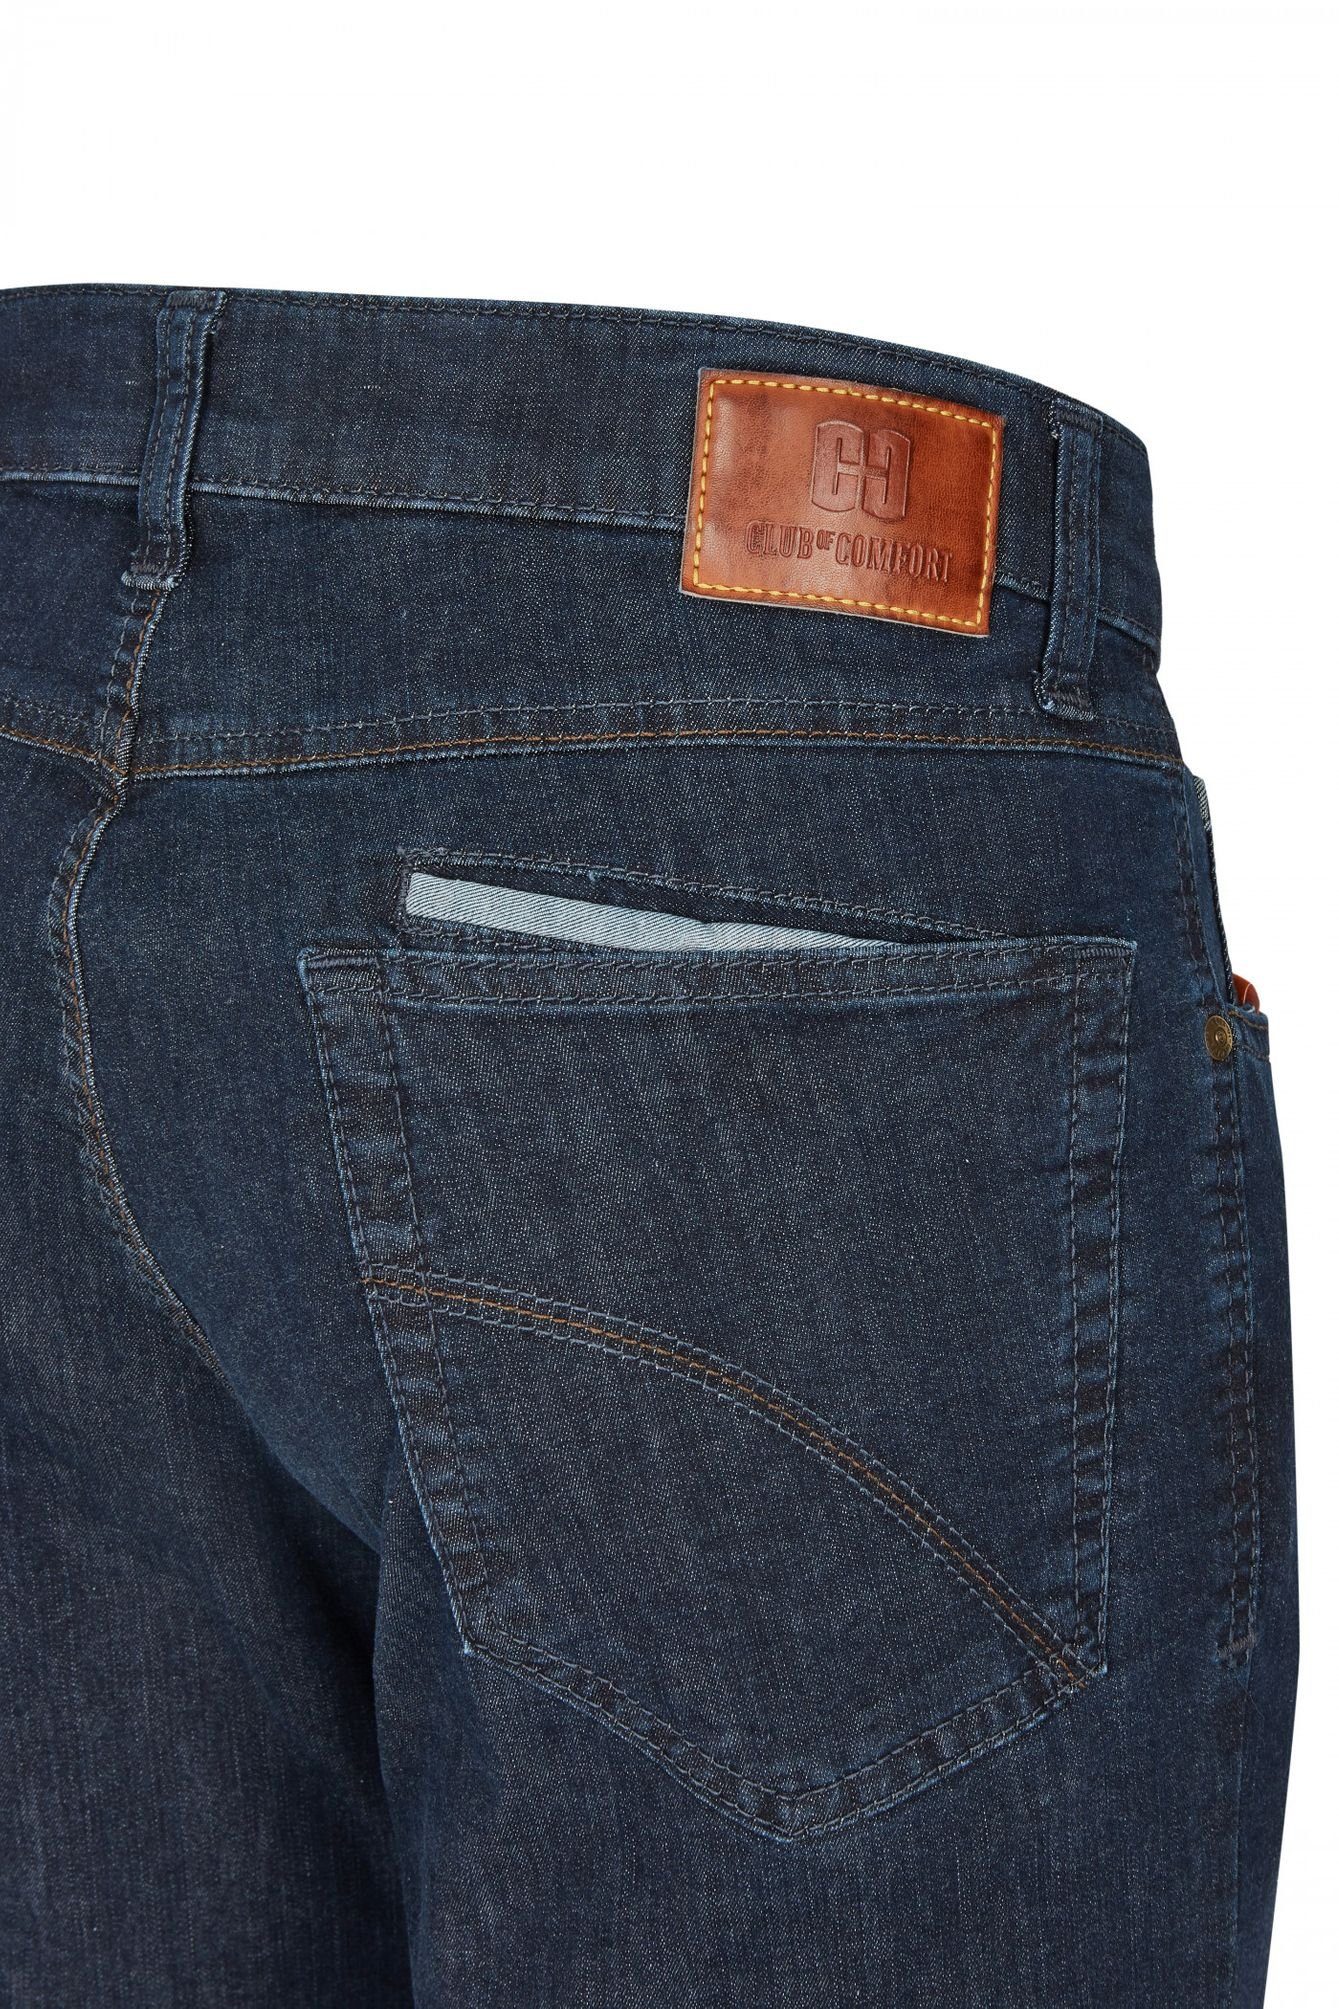 Henry-X Comfort of (41) 5-Pocket-Jeans Dunkelblau Club